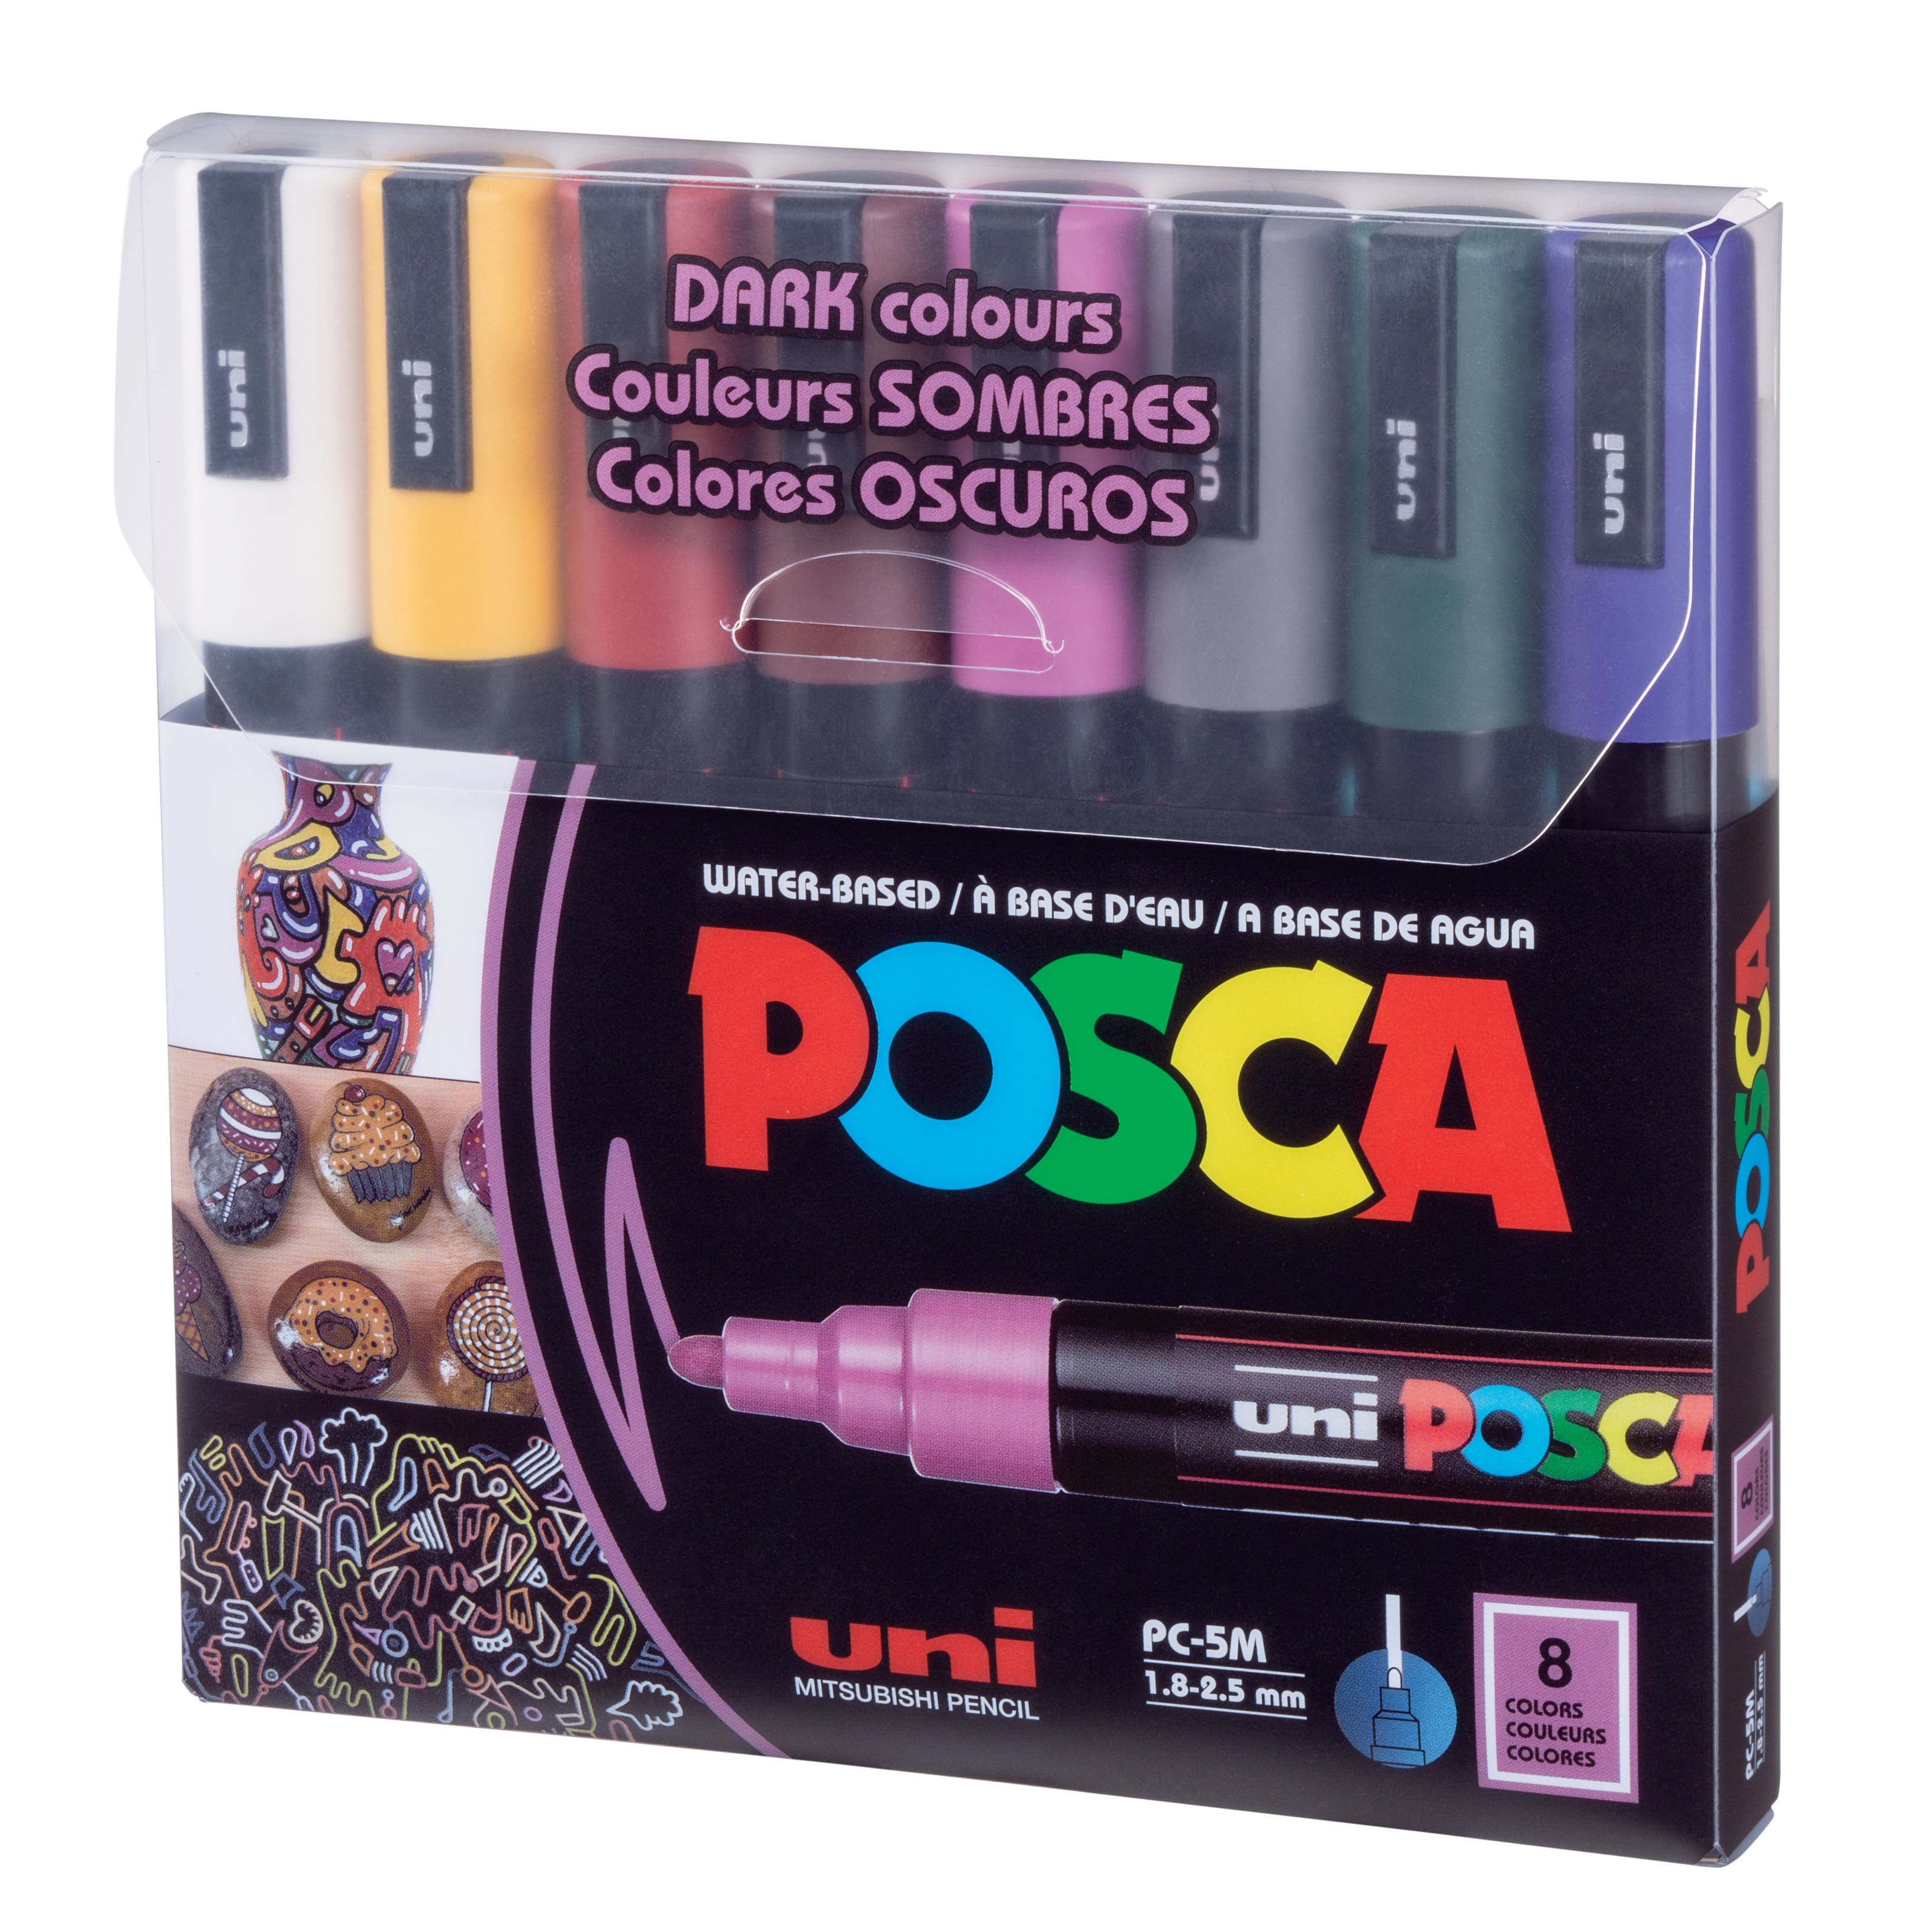 Poscas Markers Full Set Pc-5m, Uni Posca Paint Markers Set